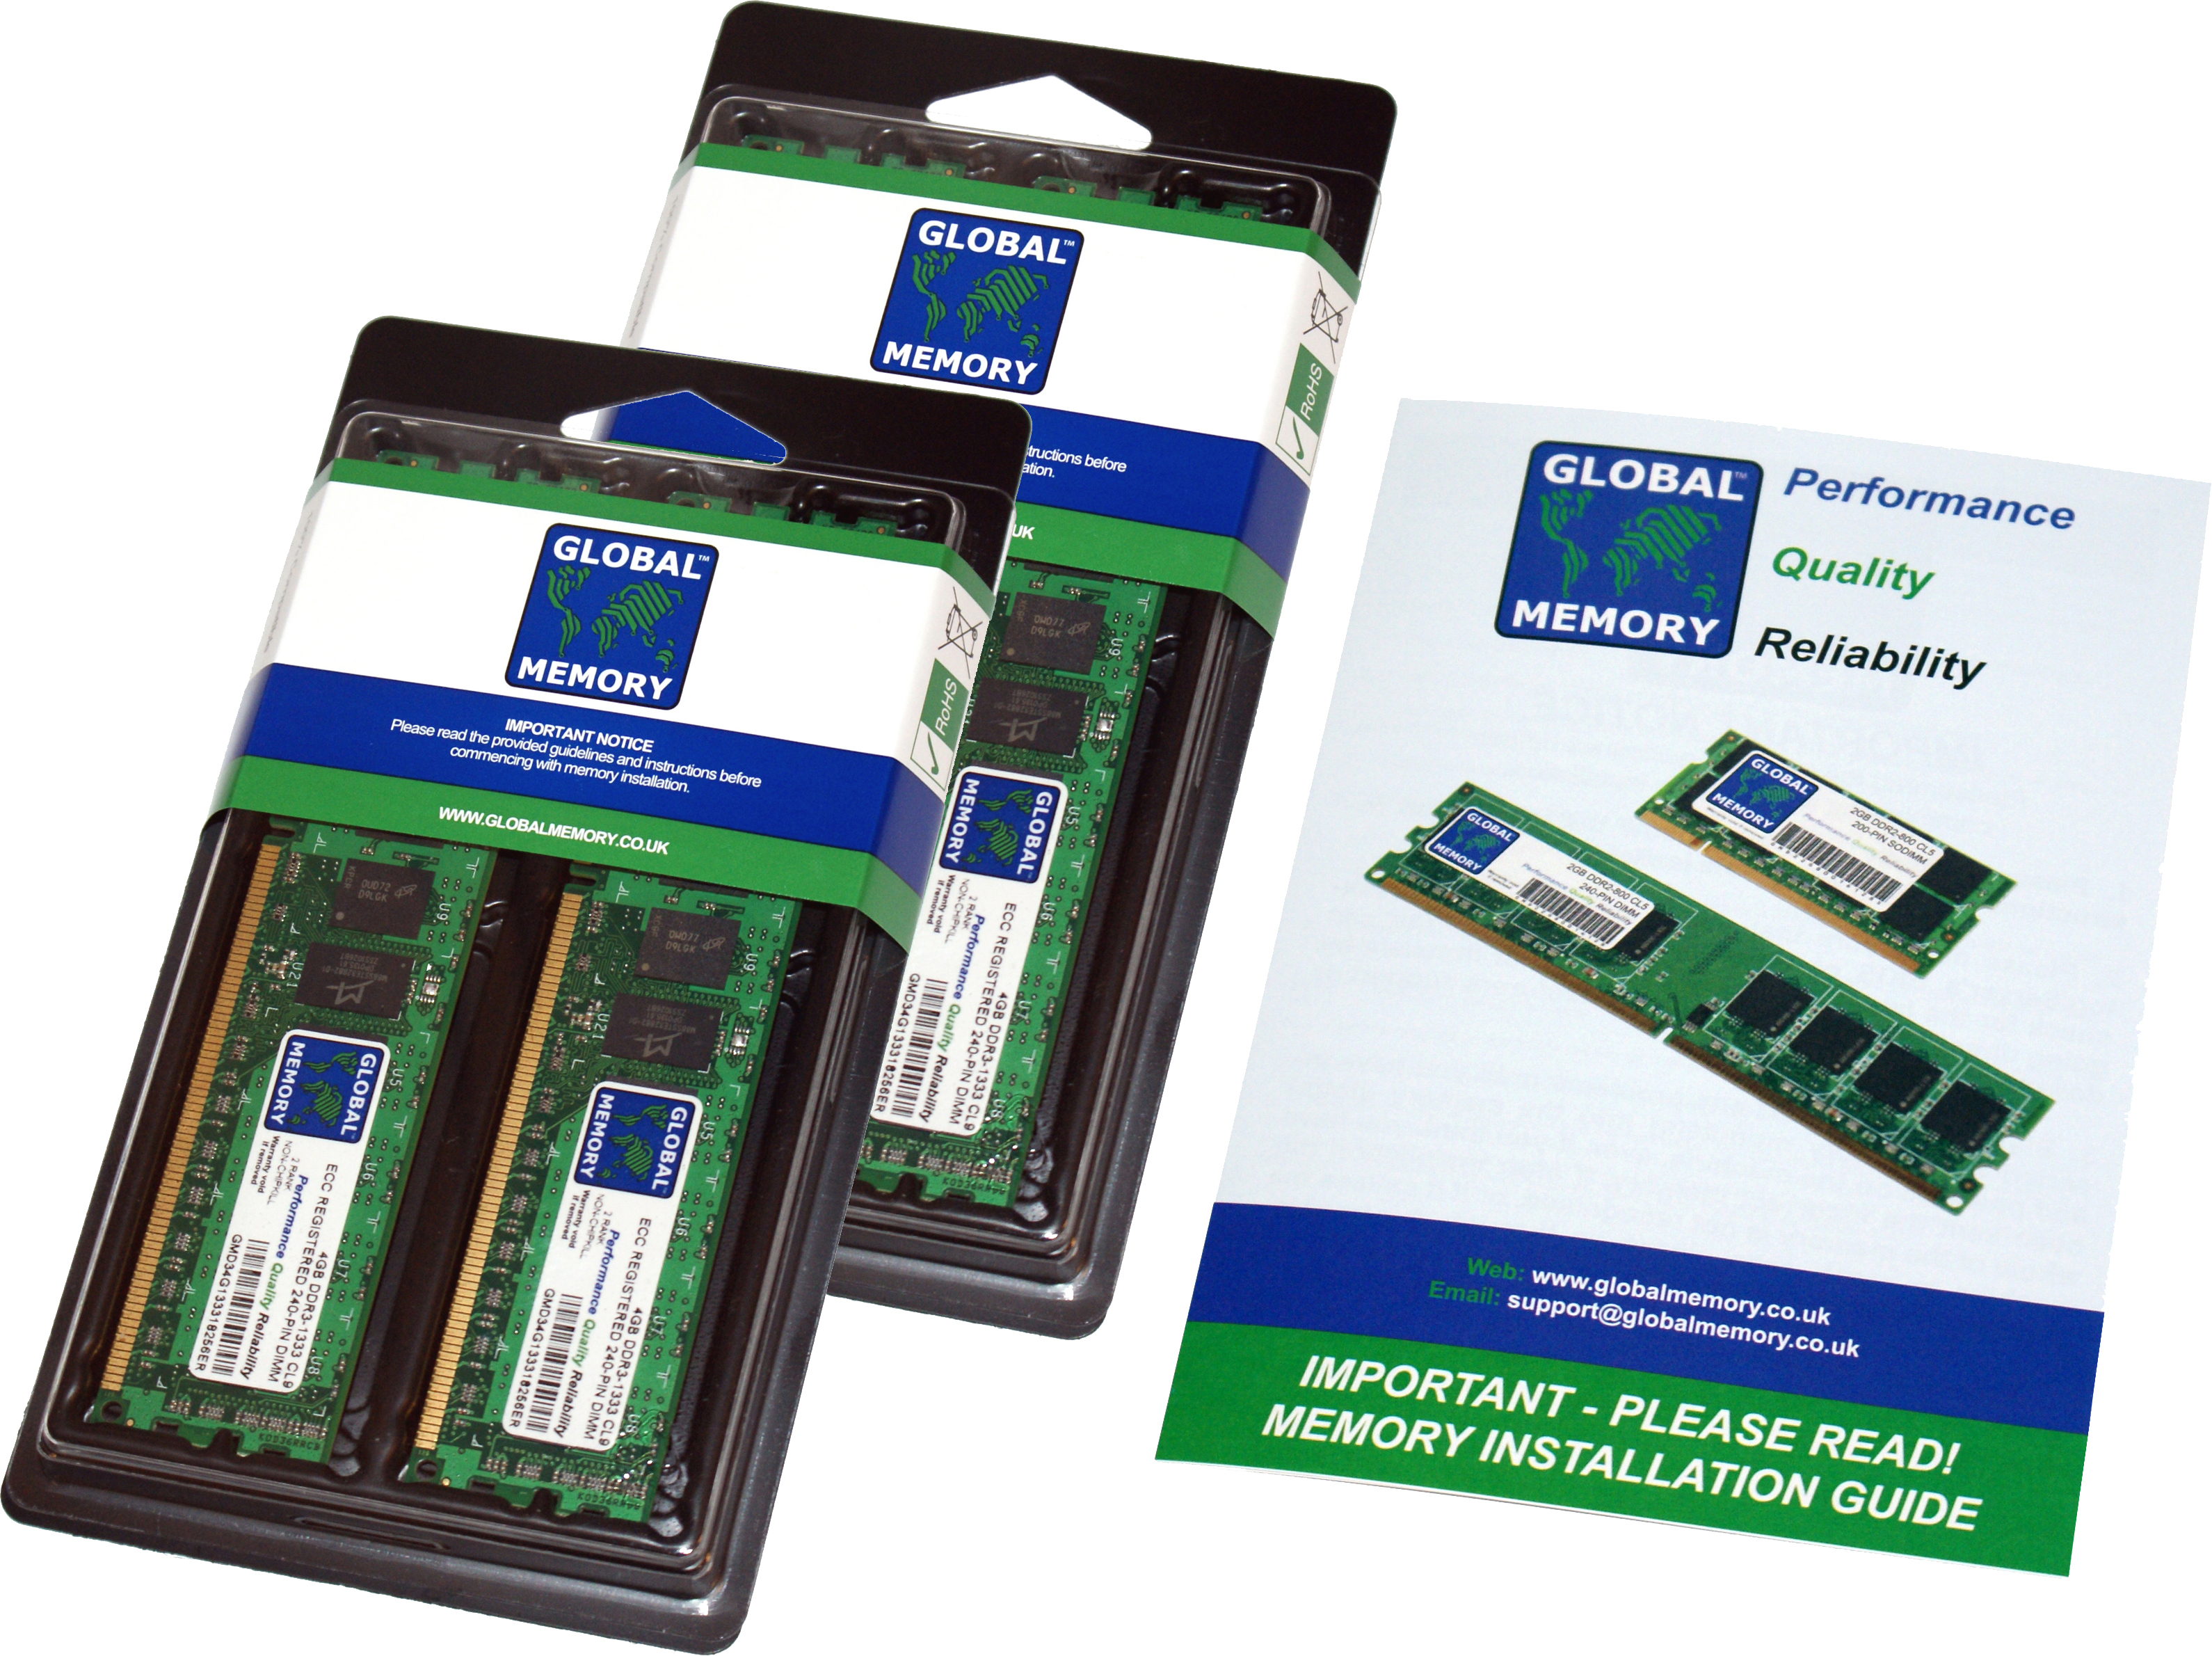 32GB (4 x 8GB) DDR4 2400MHz PC4-19200 288-PIN ECC REGISTERED DIMM (RDIMM) MEMORY RAM KIT FOR DELL SERVERS/WORKSTATIONS (4 RANK KIT CHIPKILL)